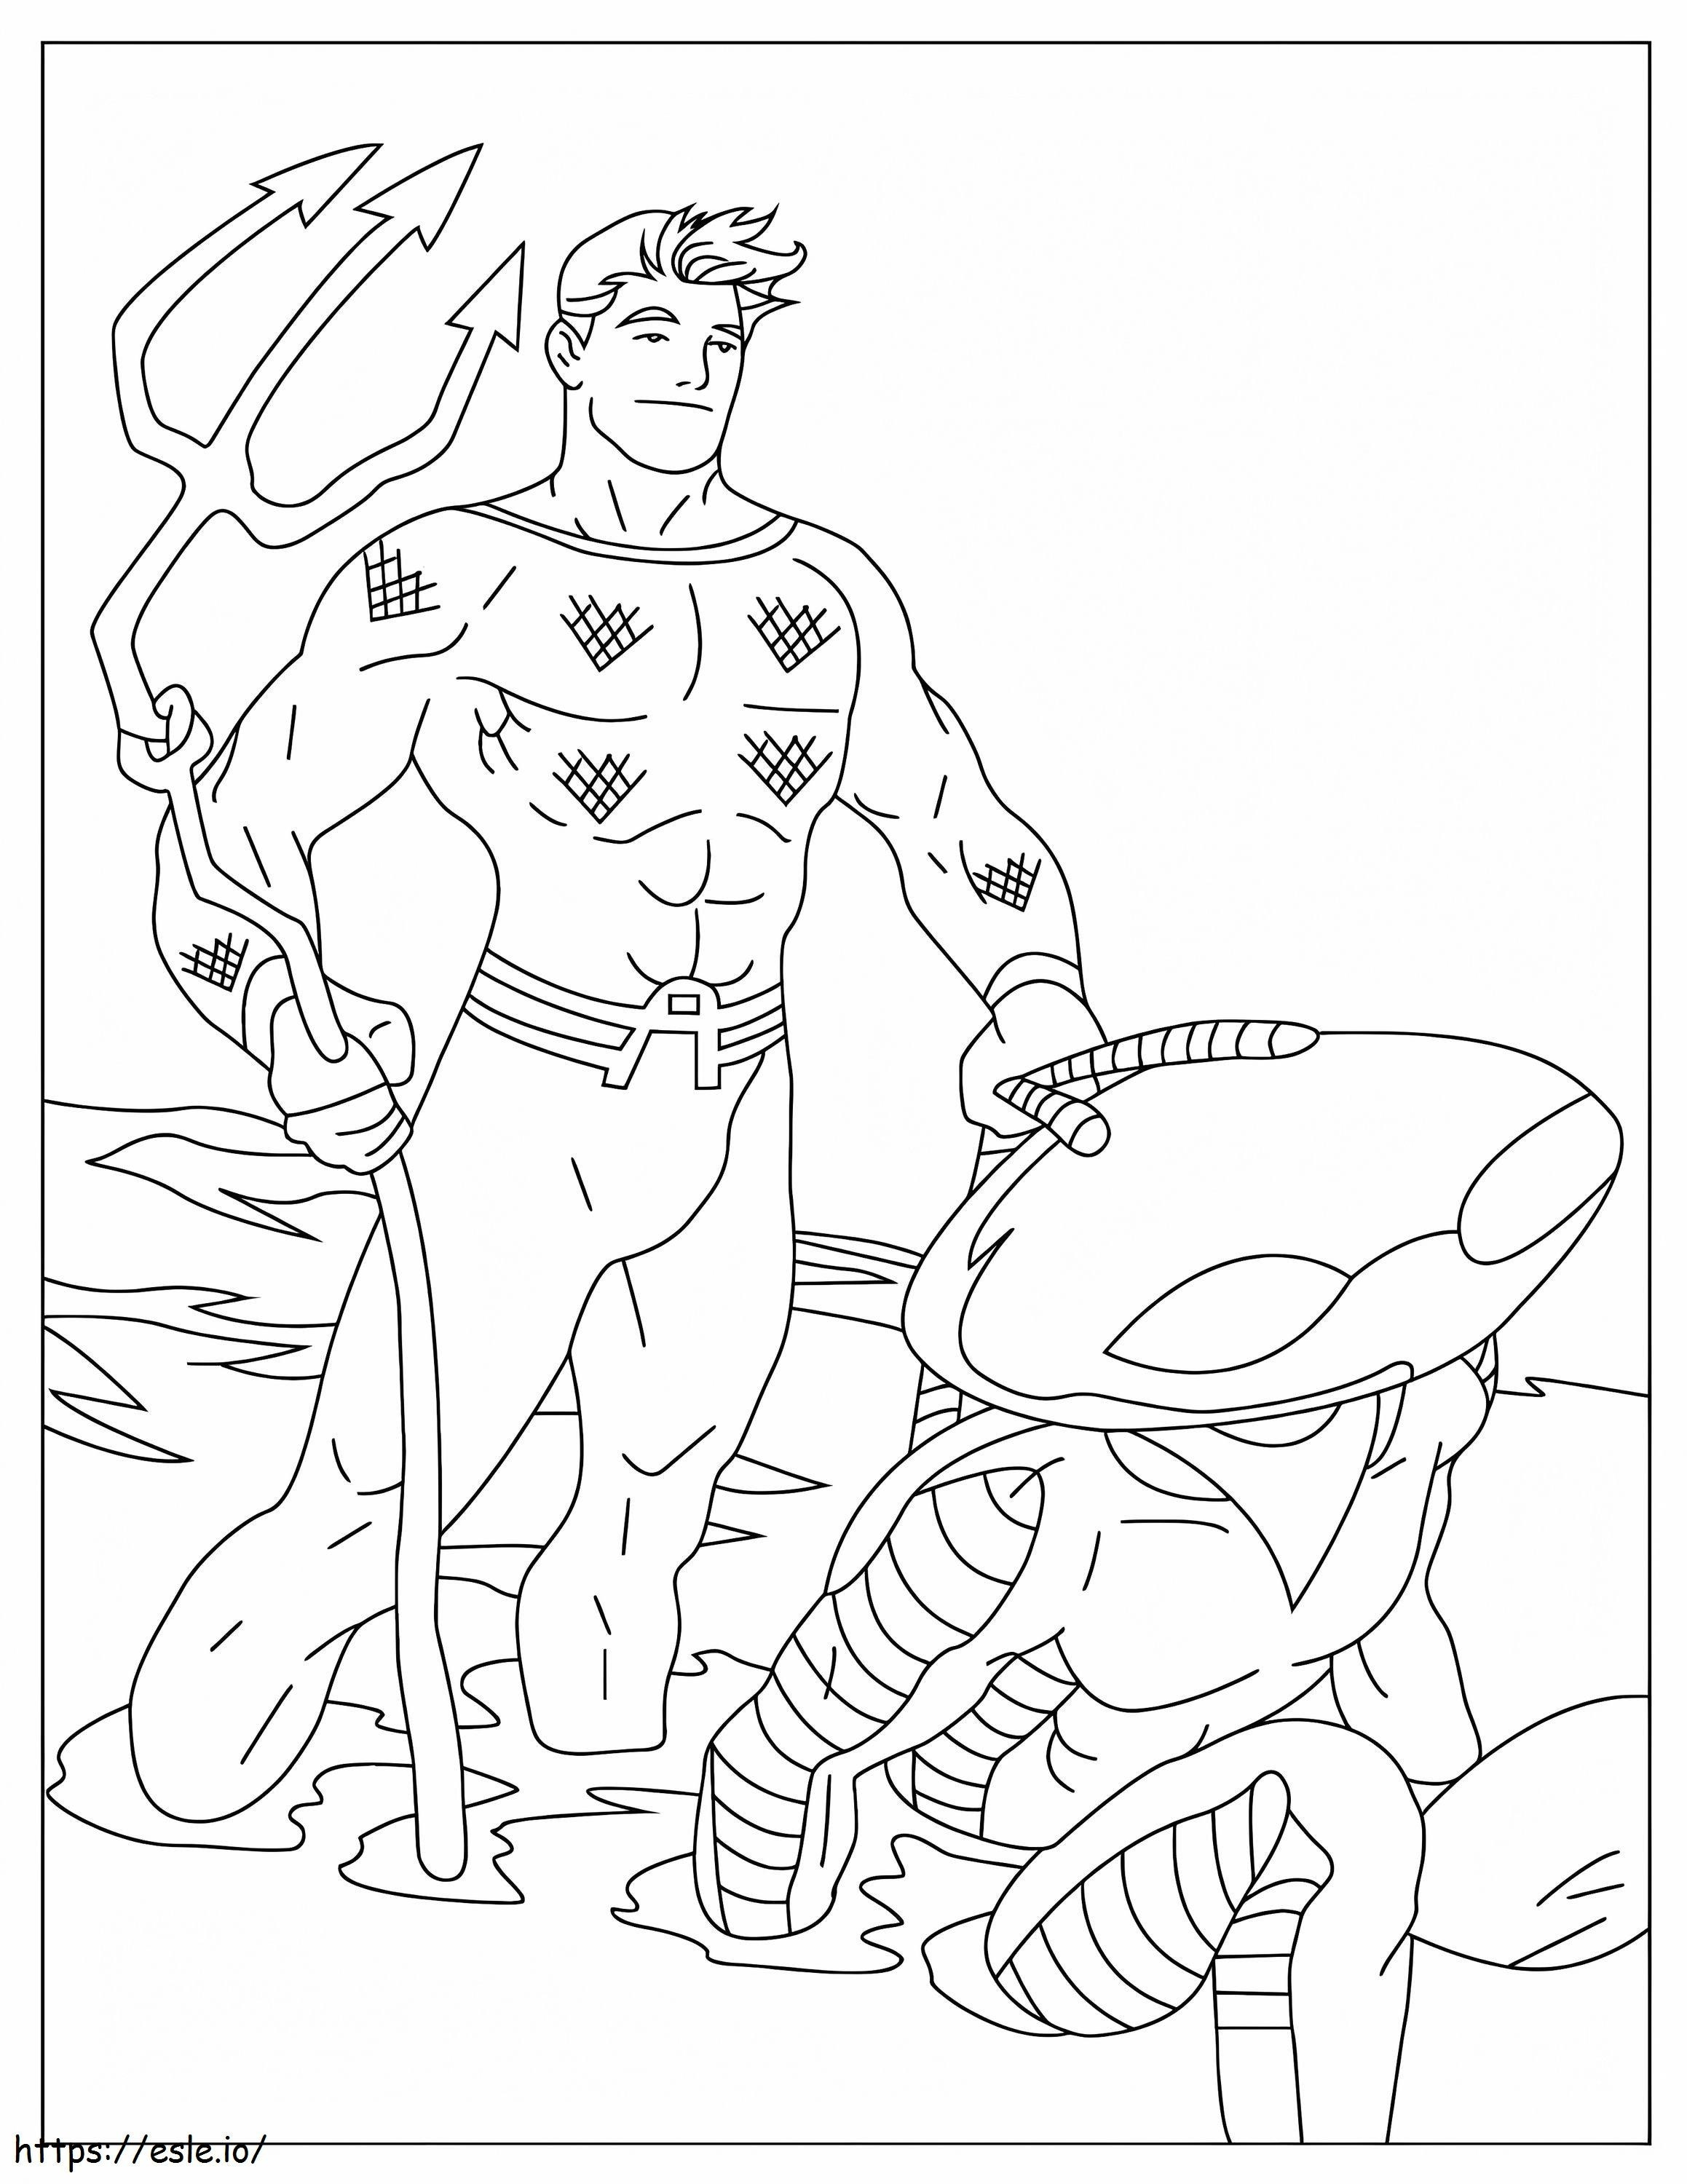 Aquaman cattura una manta da colorare